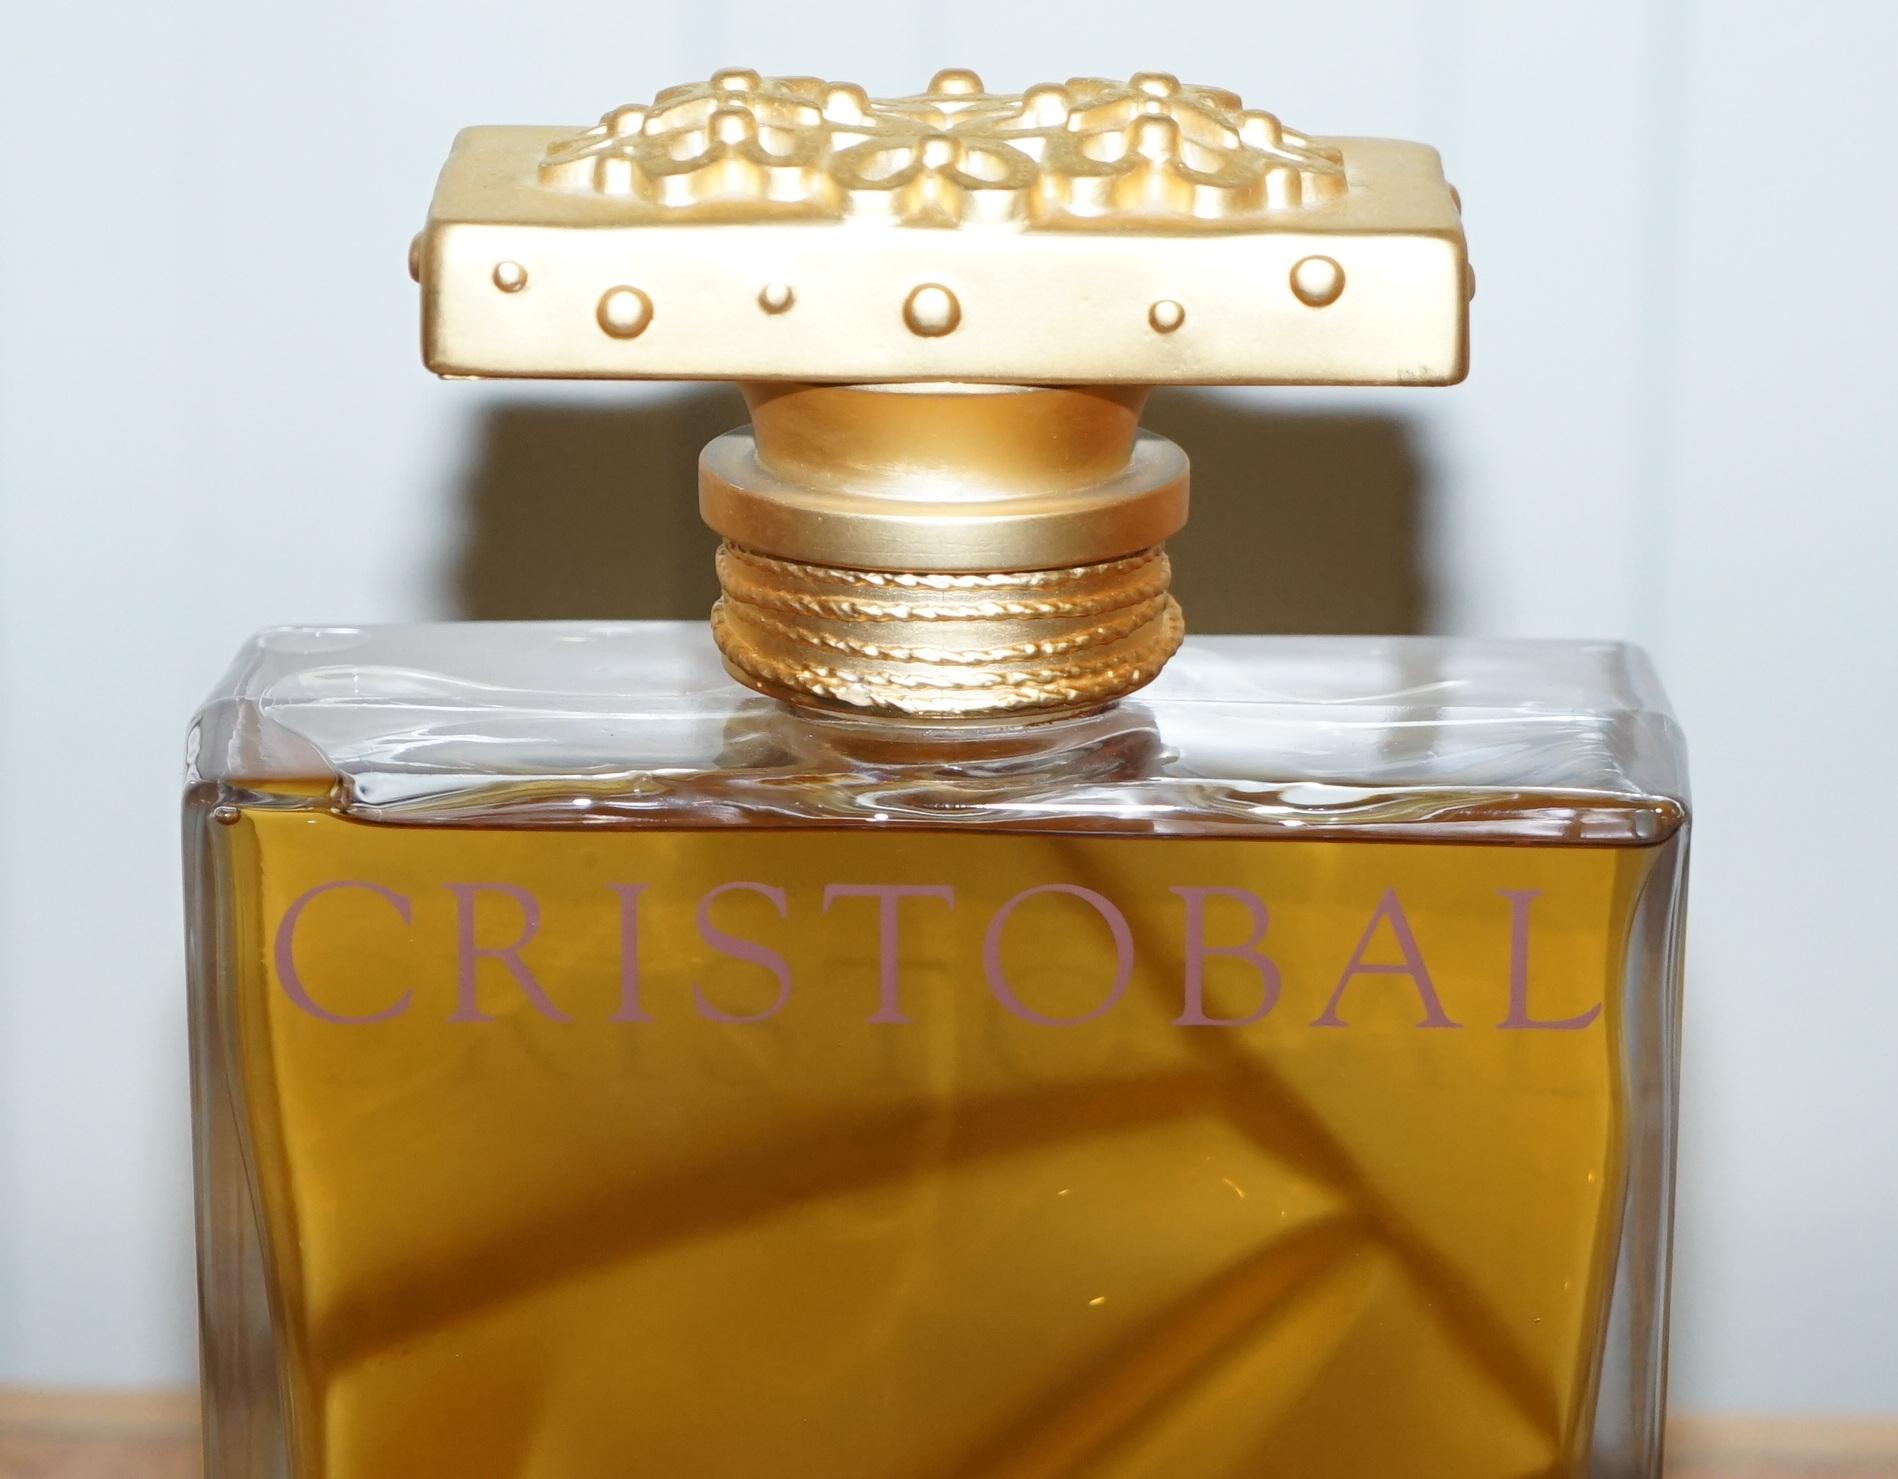 Giant Display Bottle with Eau De Perfume Cristobal Balenciaga For Sale at